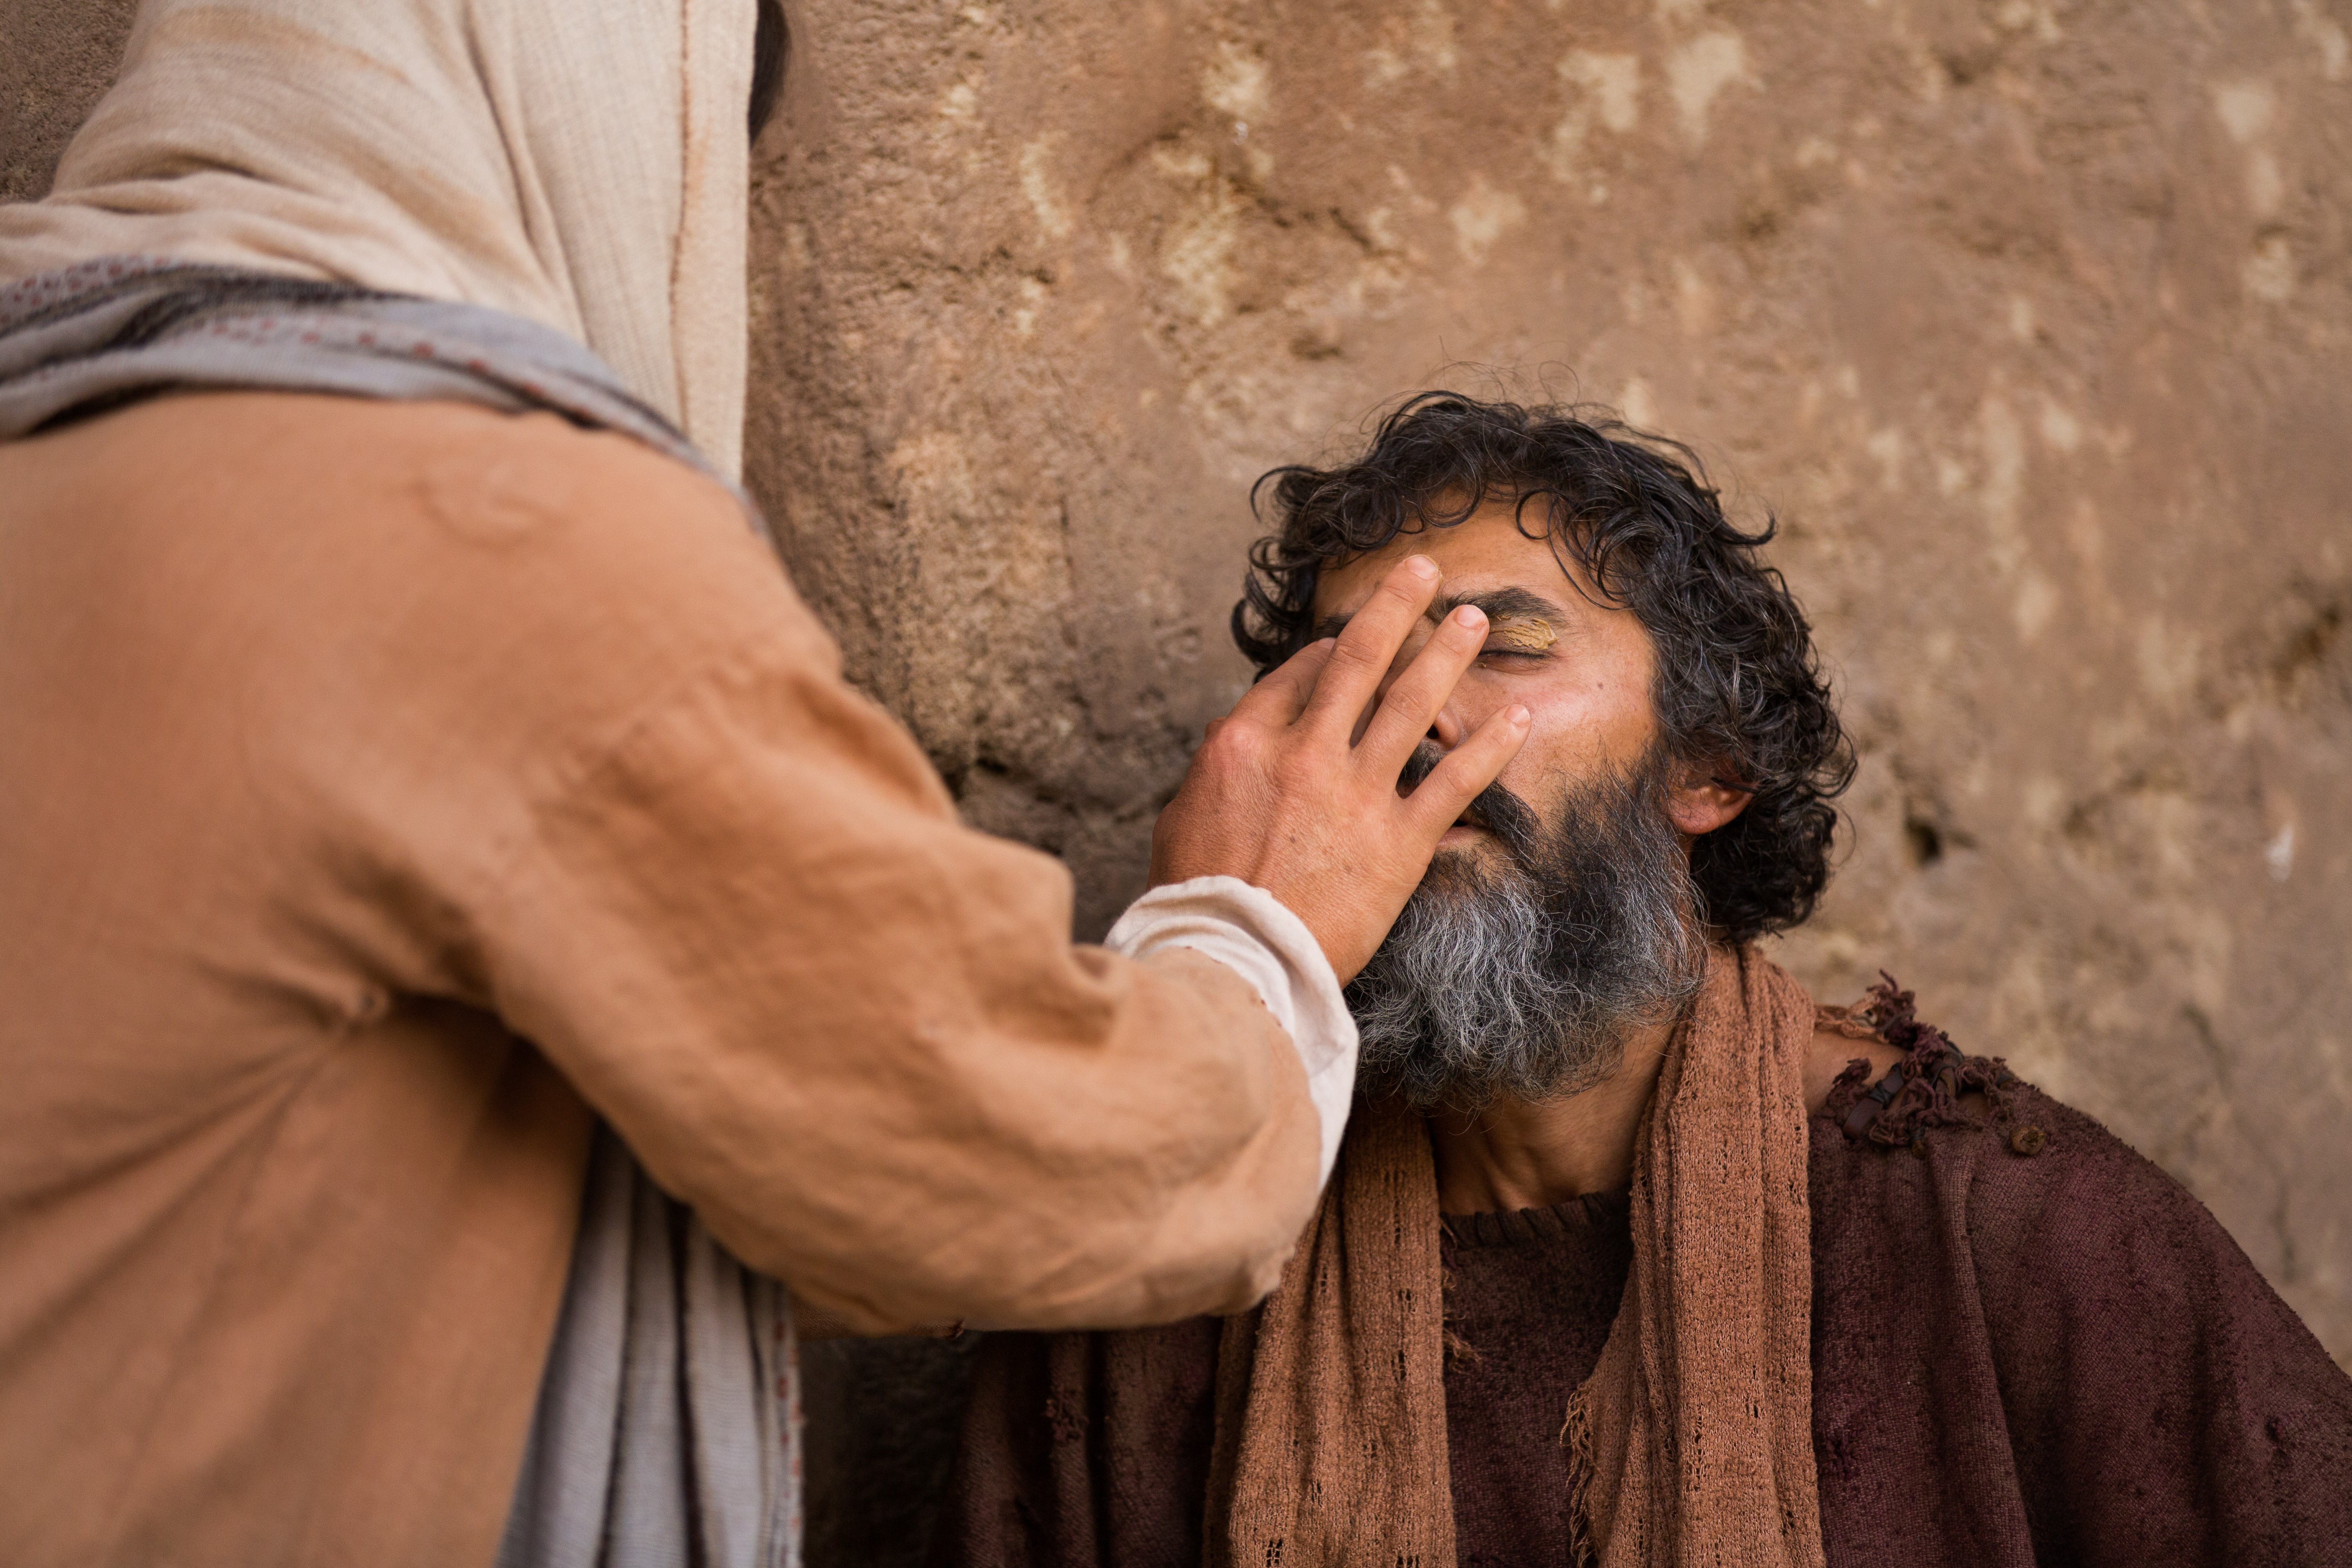 John 9:1–41, Christ heals a blind man with clay